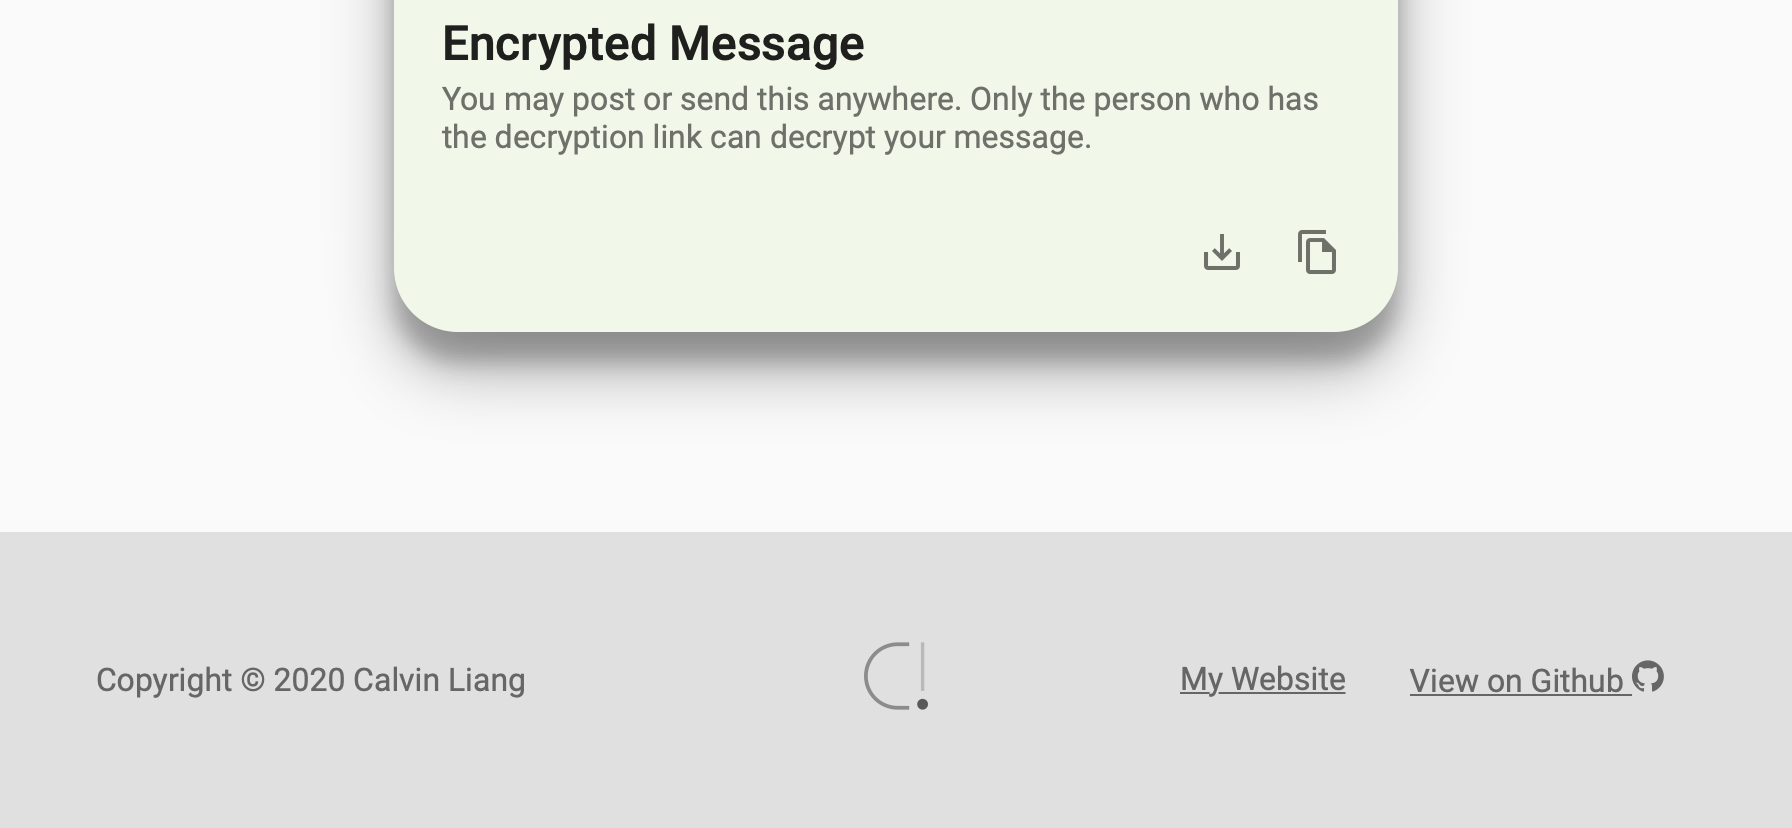 main-test-ts-encrypt-decrypt-encrypt-page-text-encryption-screenshot-896-414-1-snap.png